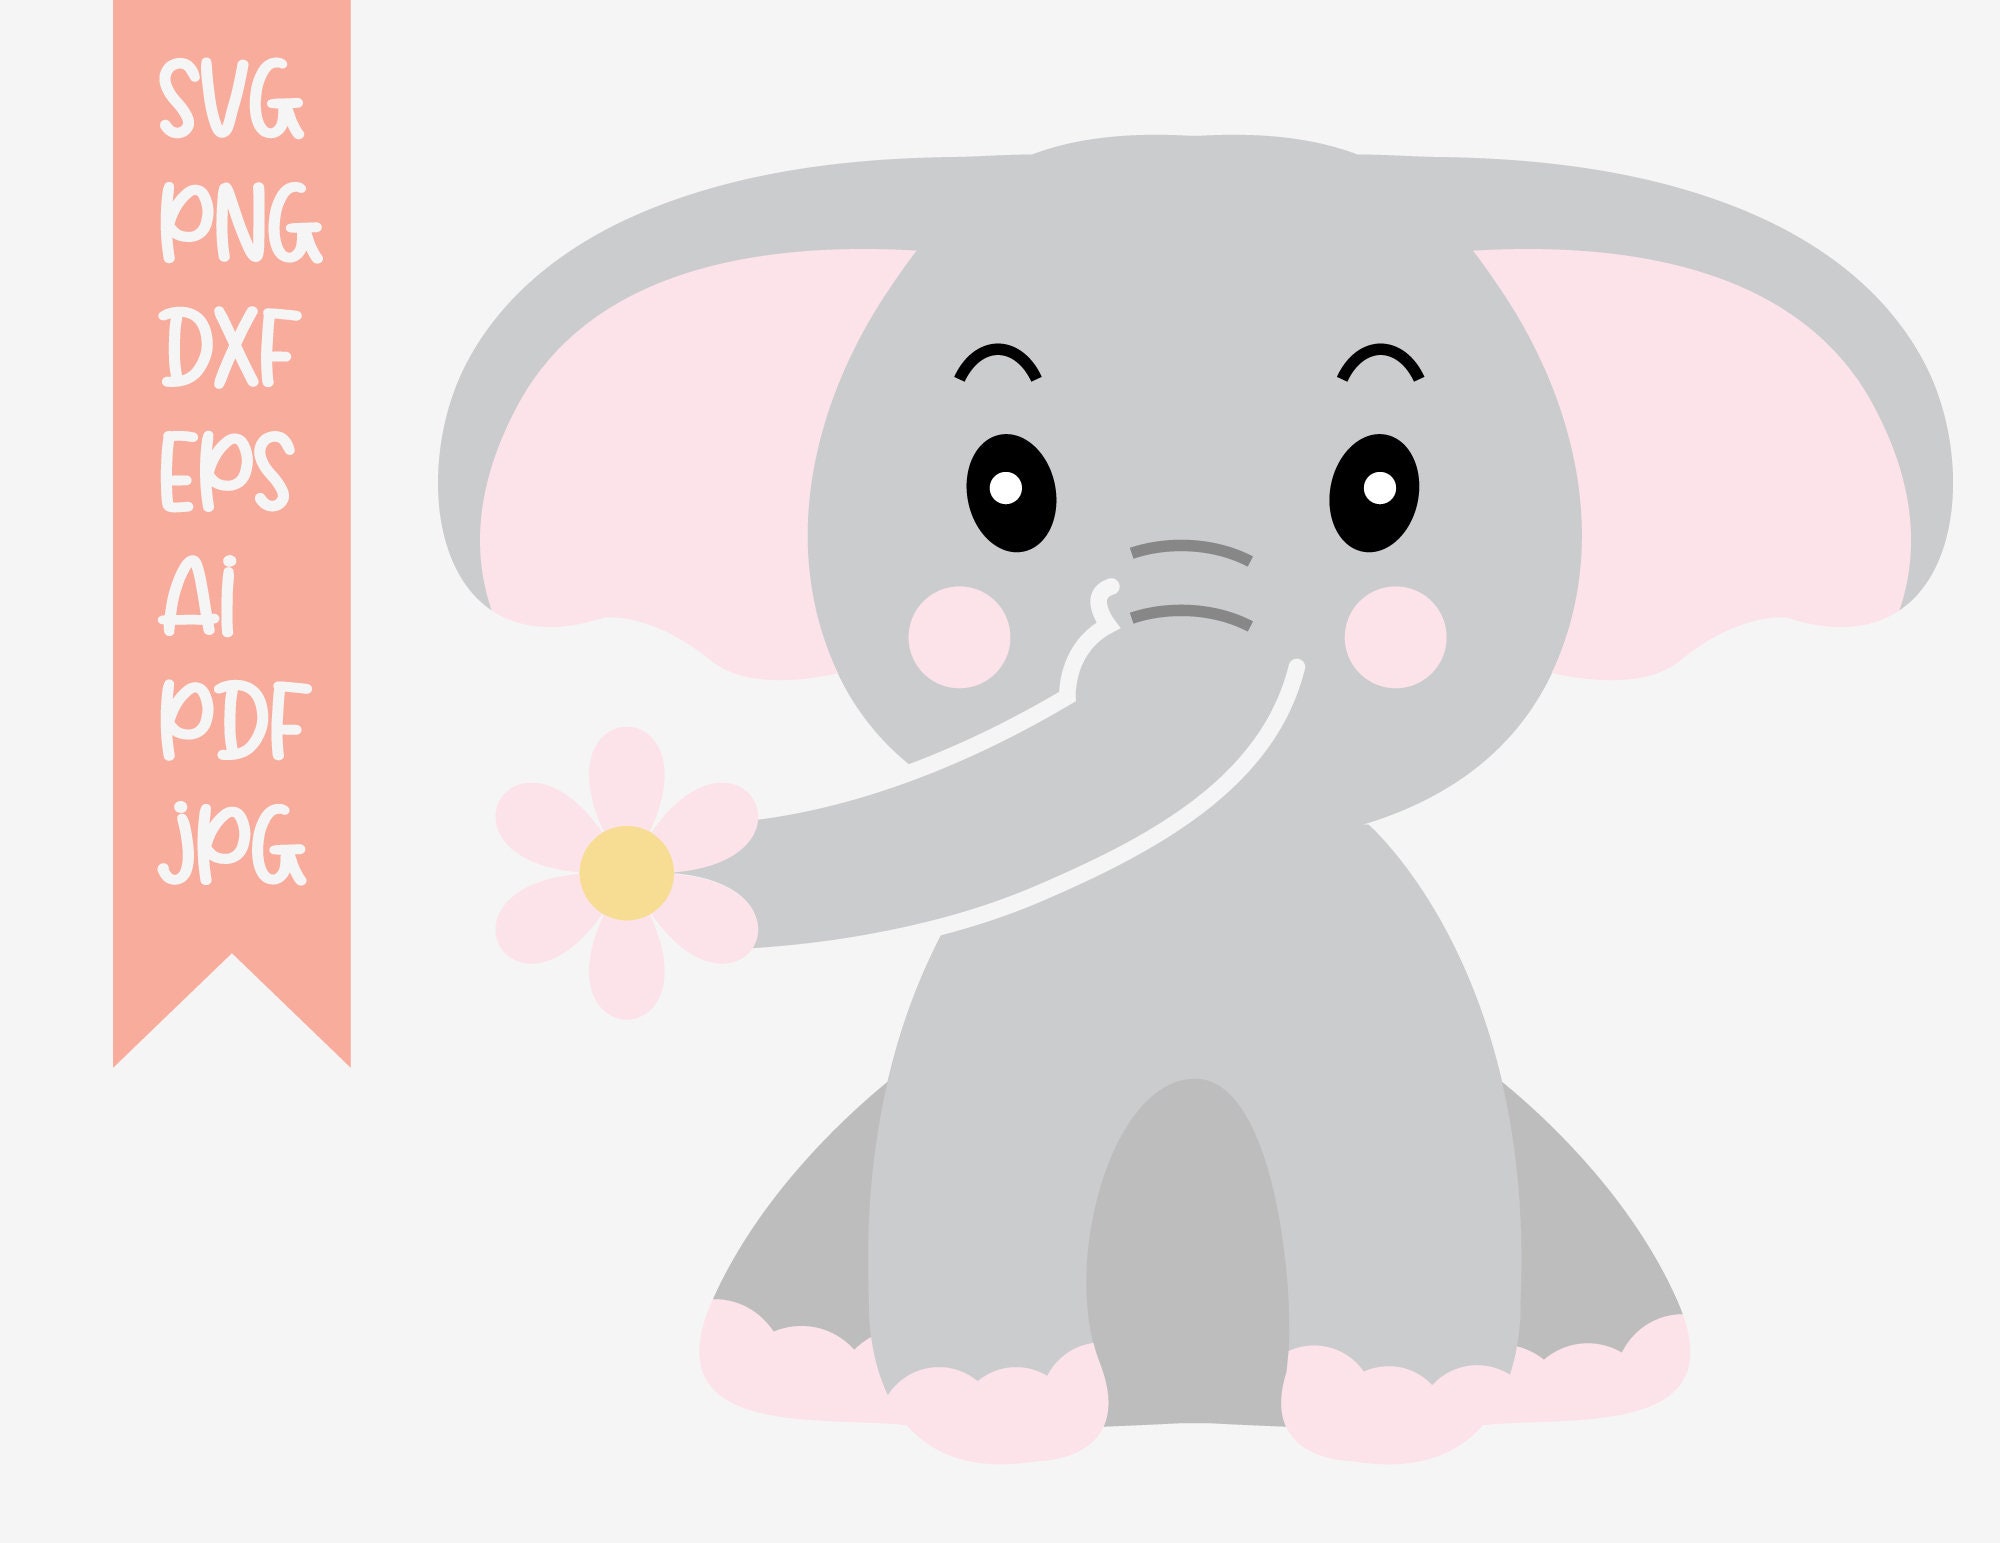 Cute baby elephant cartoon SVG cut file pngepsaipdfjpe | Etsy